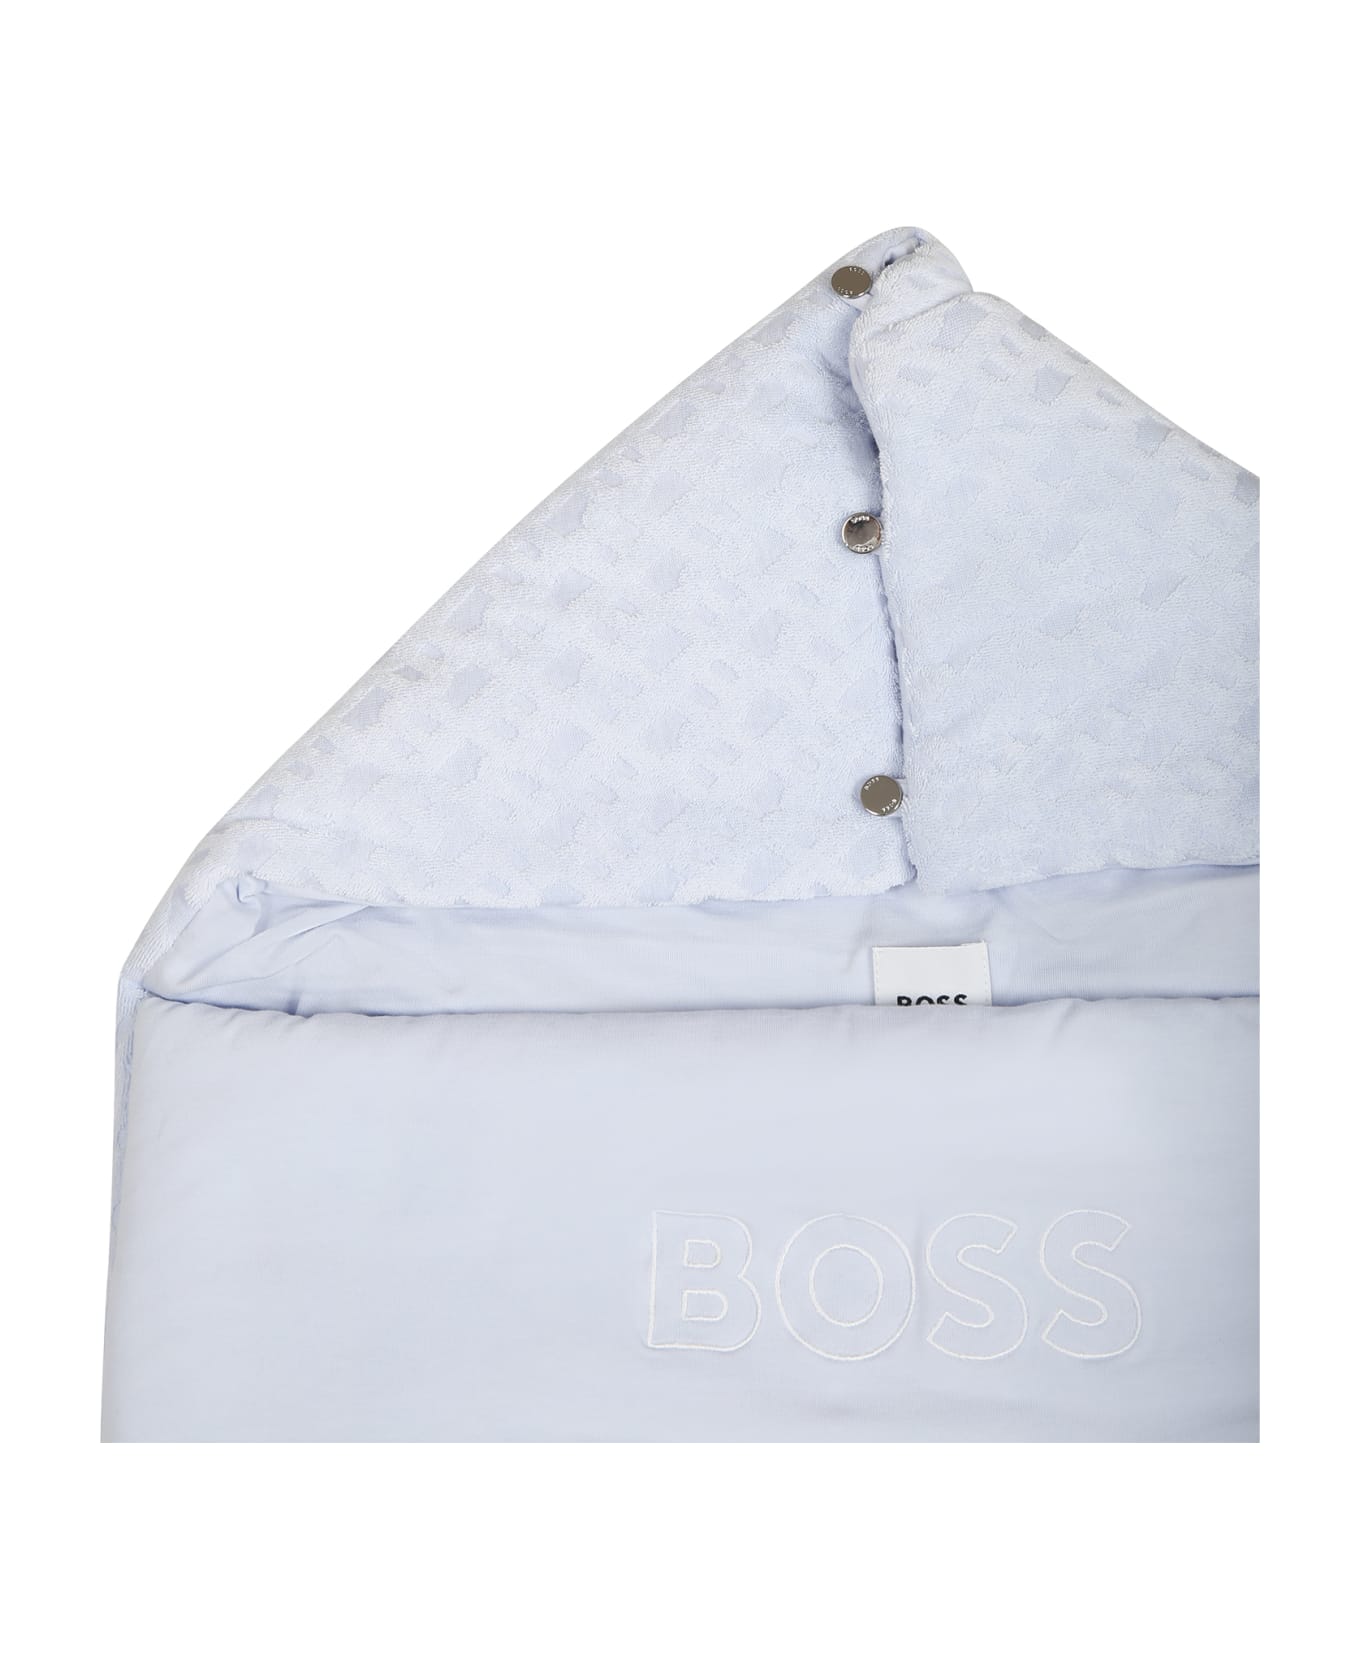 Hugo Boss Light Blue Sleeping Bag For Baby Boy With Logo - Light Blue